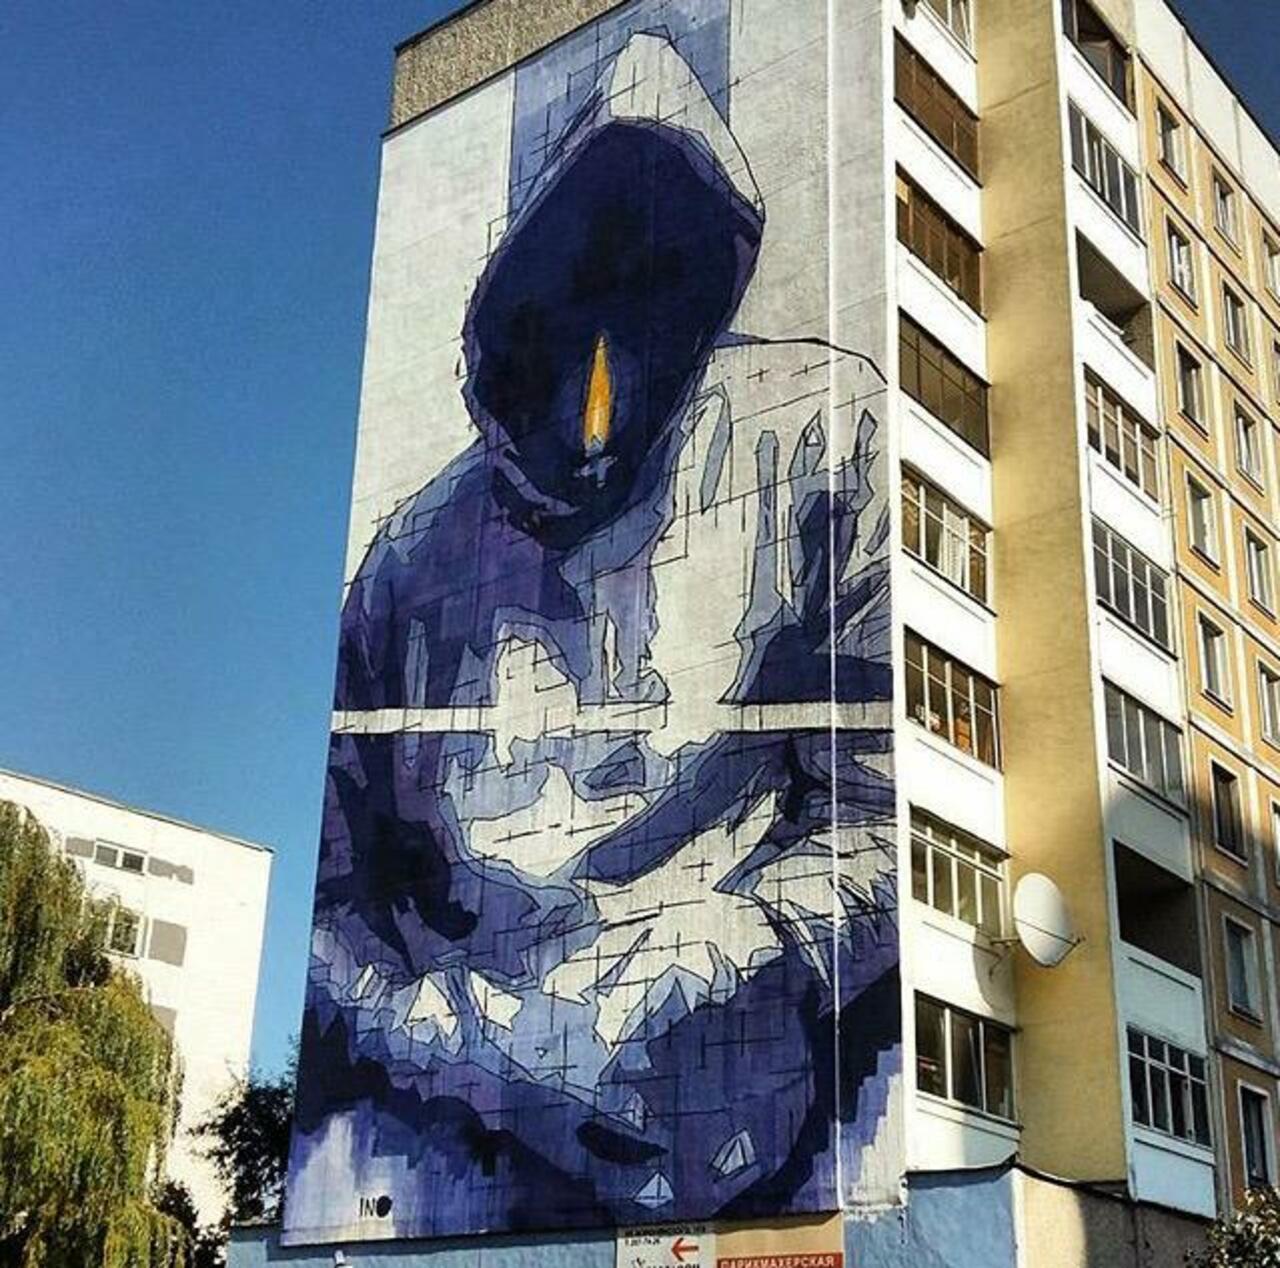 'Man With No Name' 
New Street Art by iNO in Minsk, Belarus 

#art #graffiti #mural #streetart http://t.co/ZBCZ7OPXkT